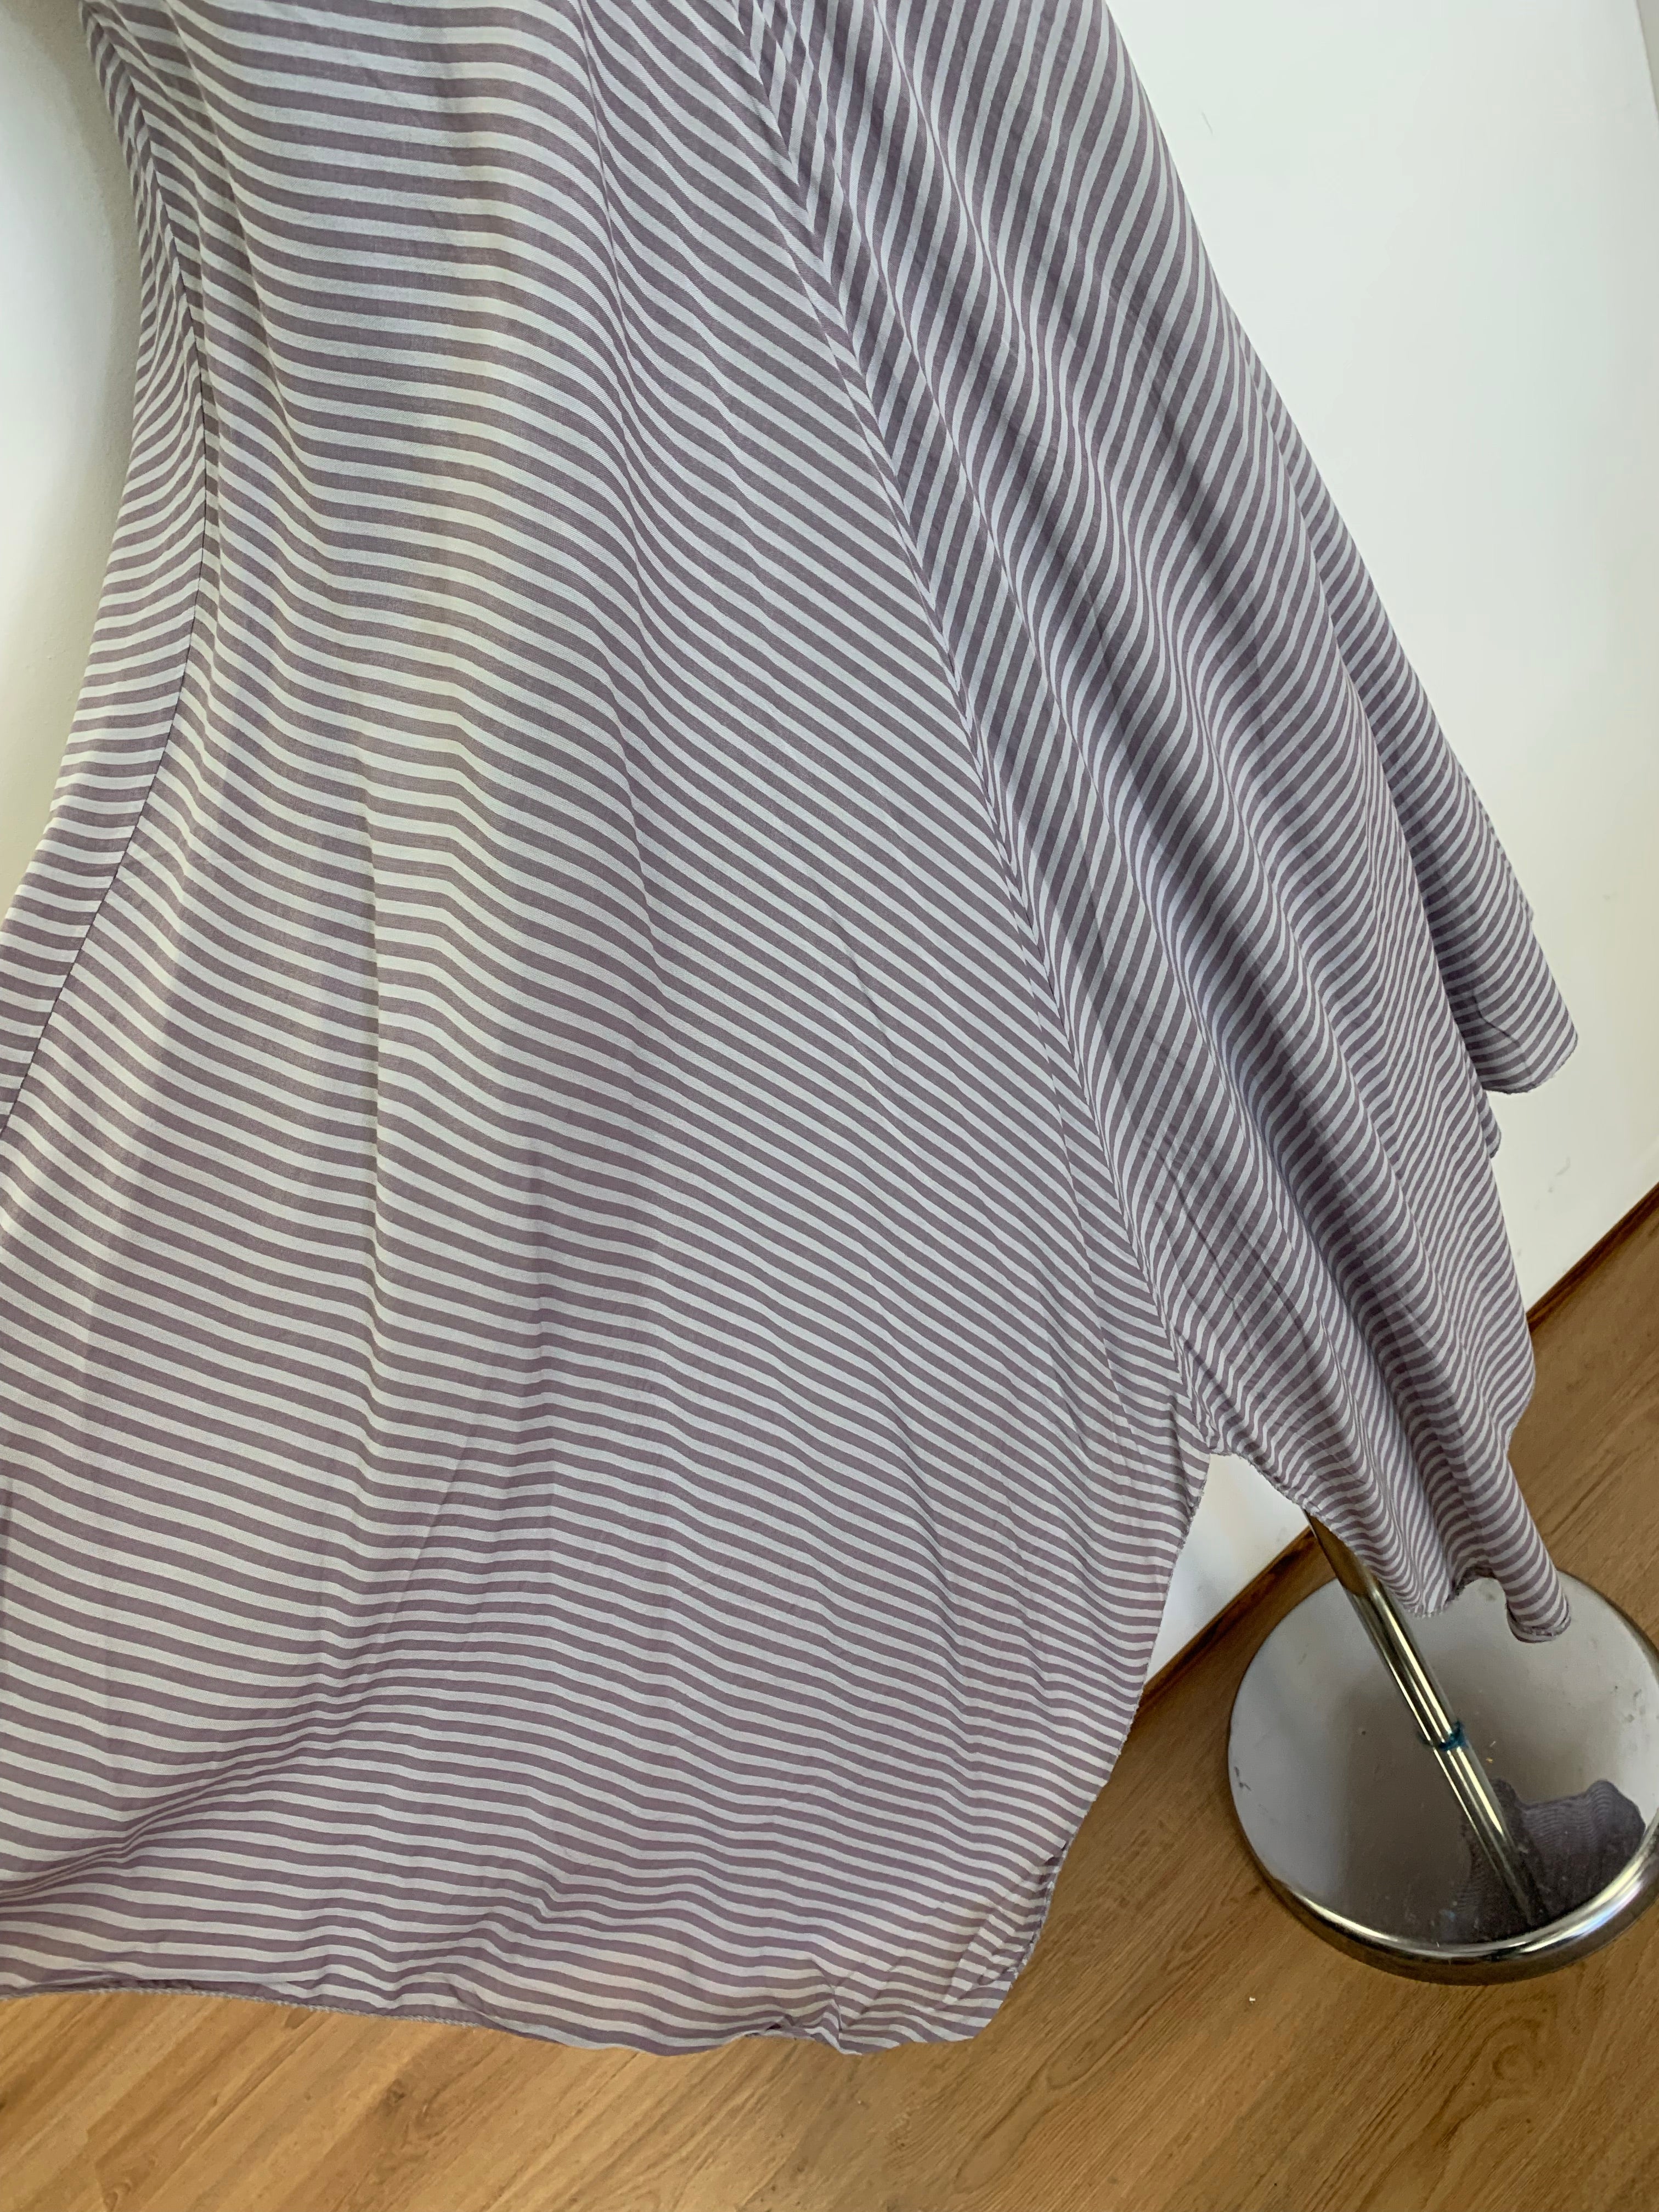 Classic Handkerchief Style Maxi Dress - Diagonal Pinstripe